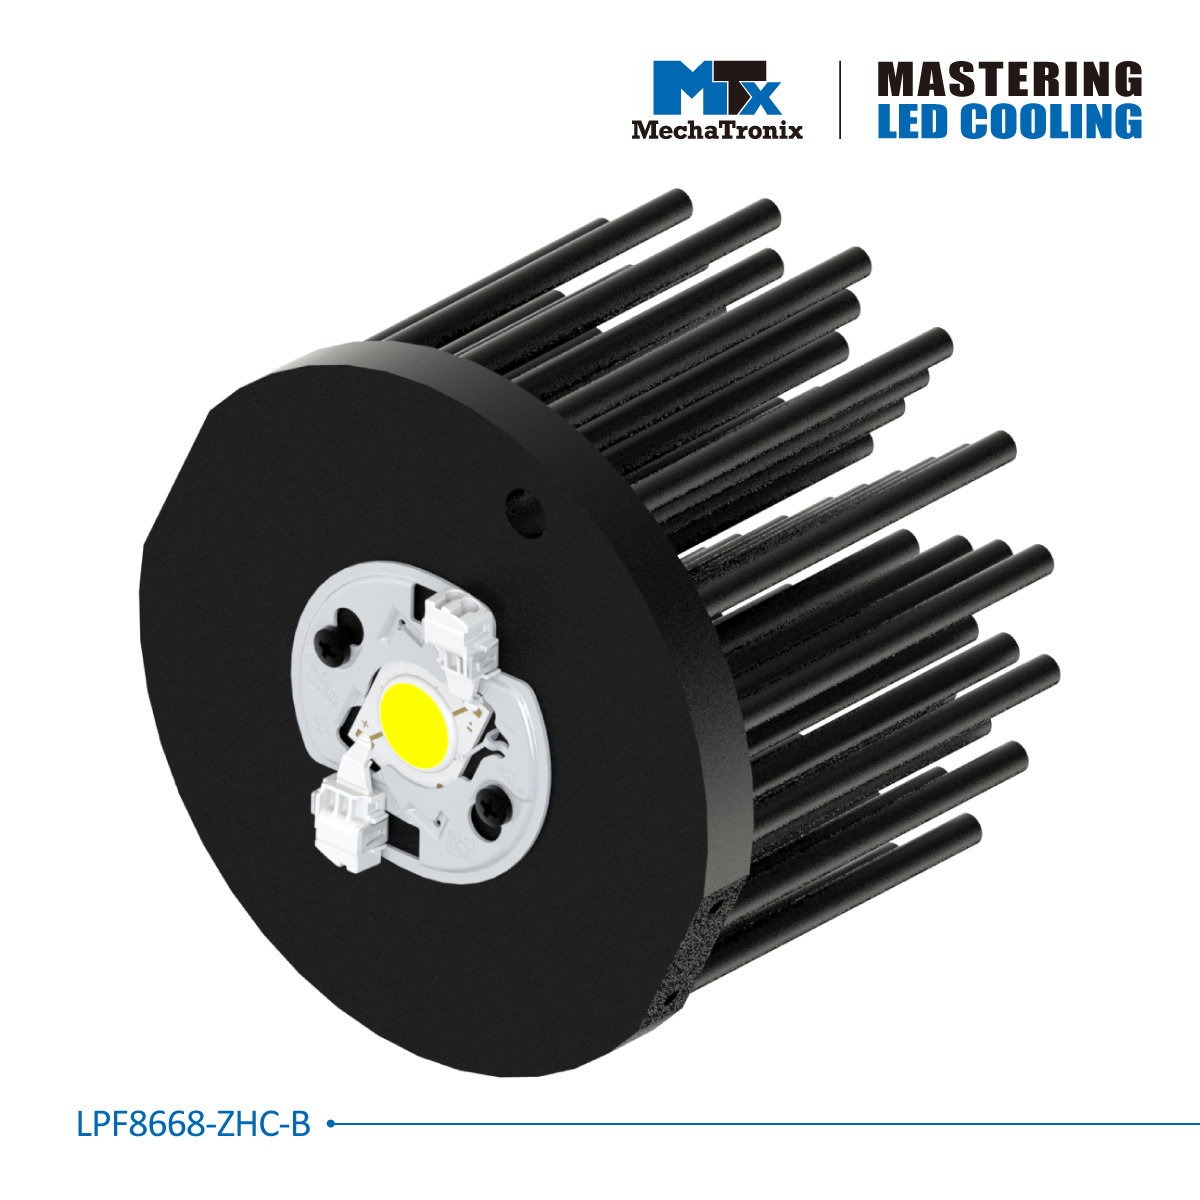 MechaTronix Heat Sink round 11cm LPF11180-ZHE-B for LED <9600lm